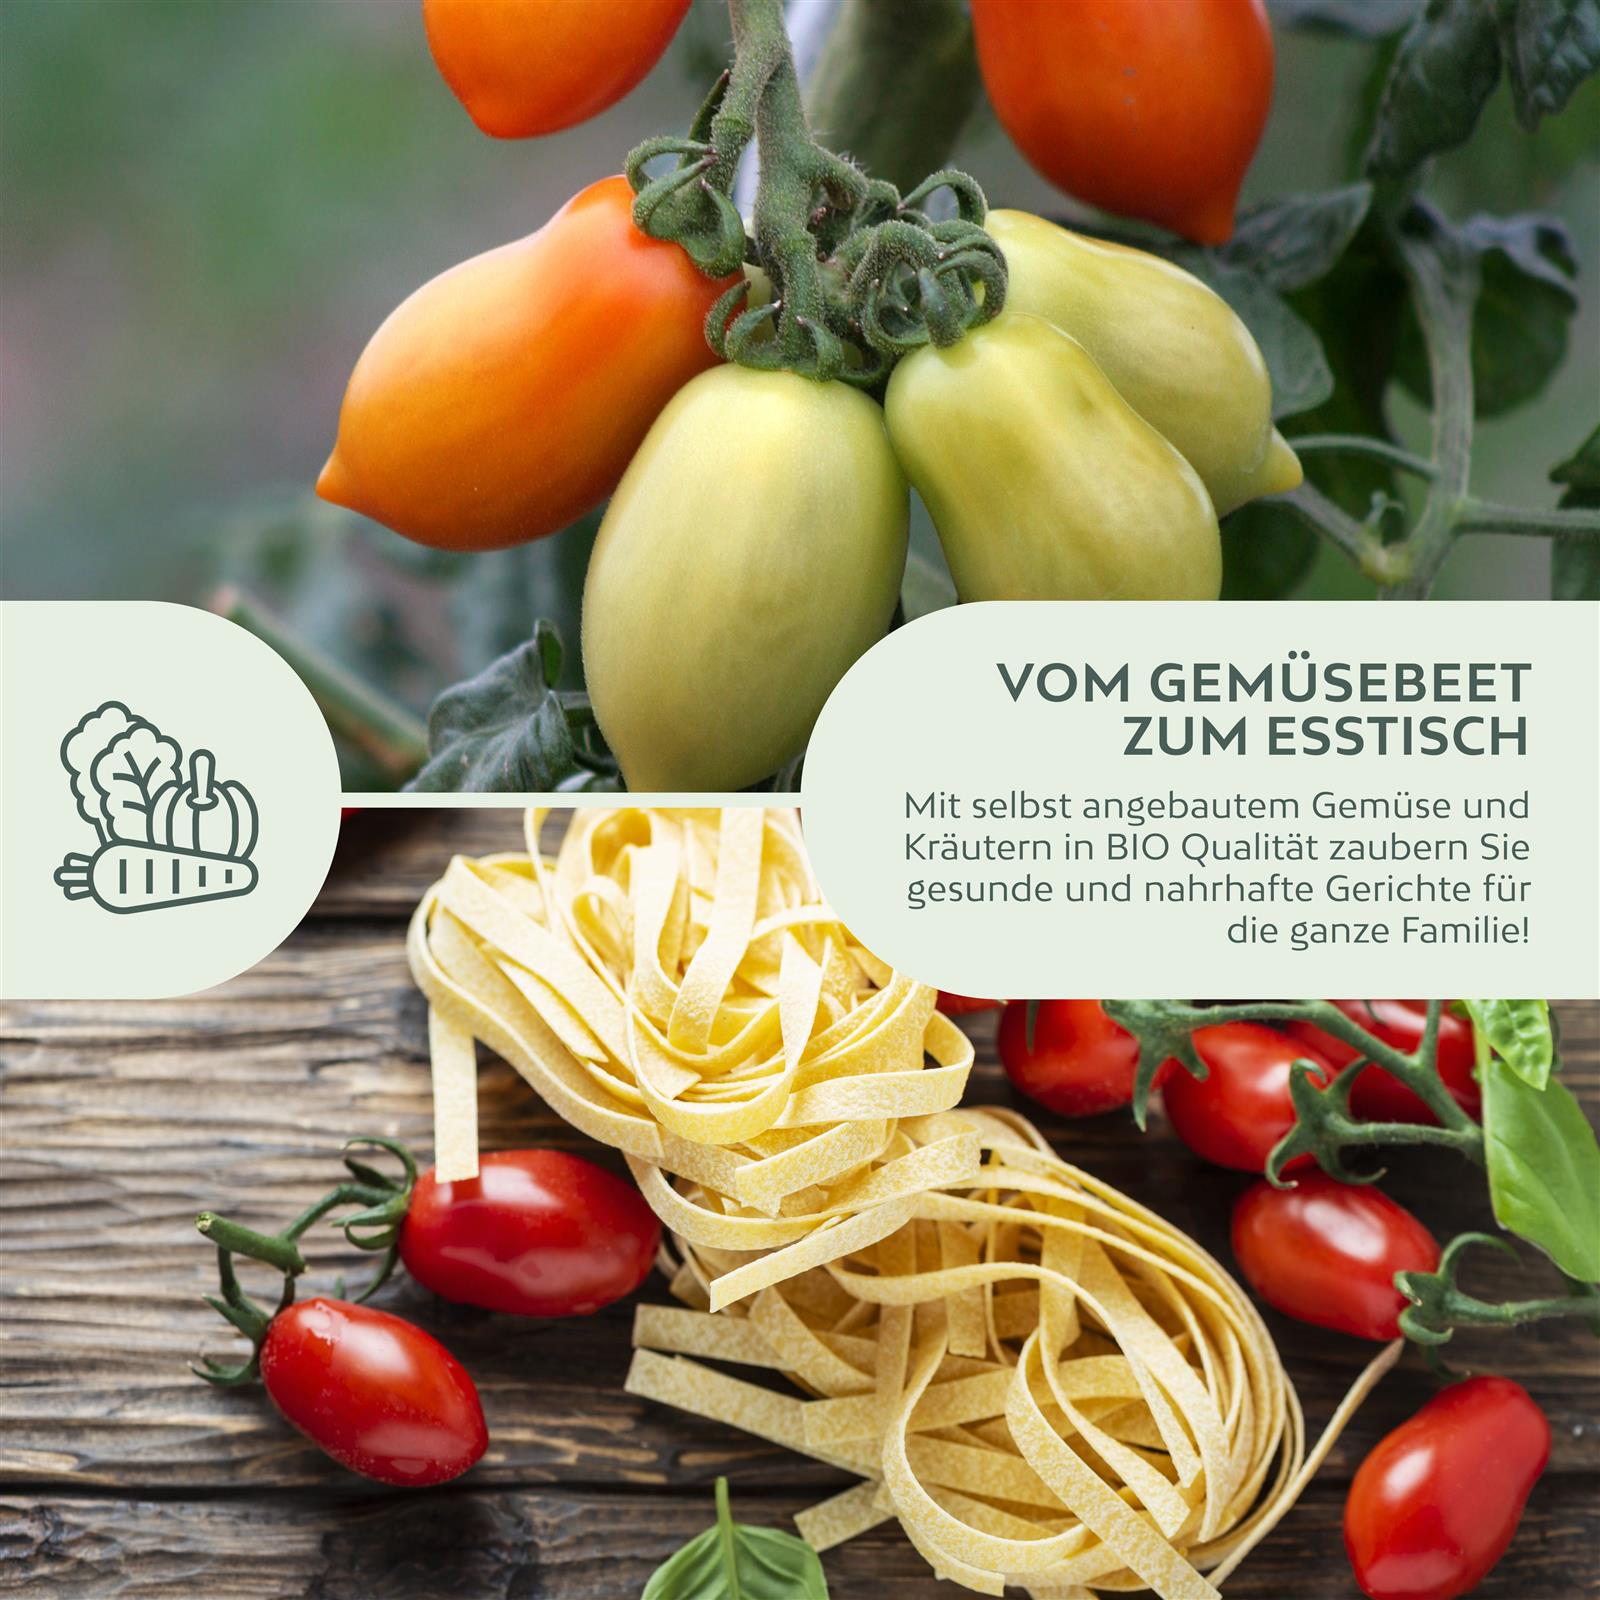 BIO Tomatensamen (Principe Borghese) - Tomaten Saatgut aus biologischem Anbau (10 Korn)